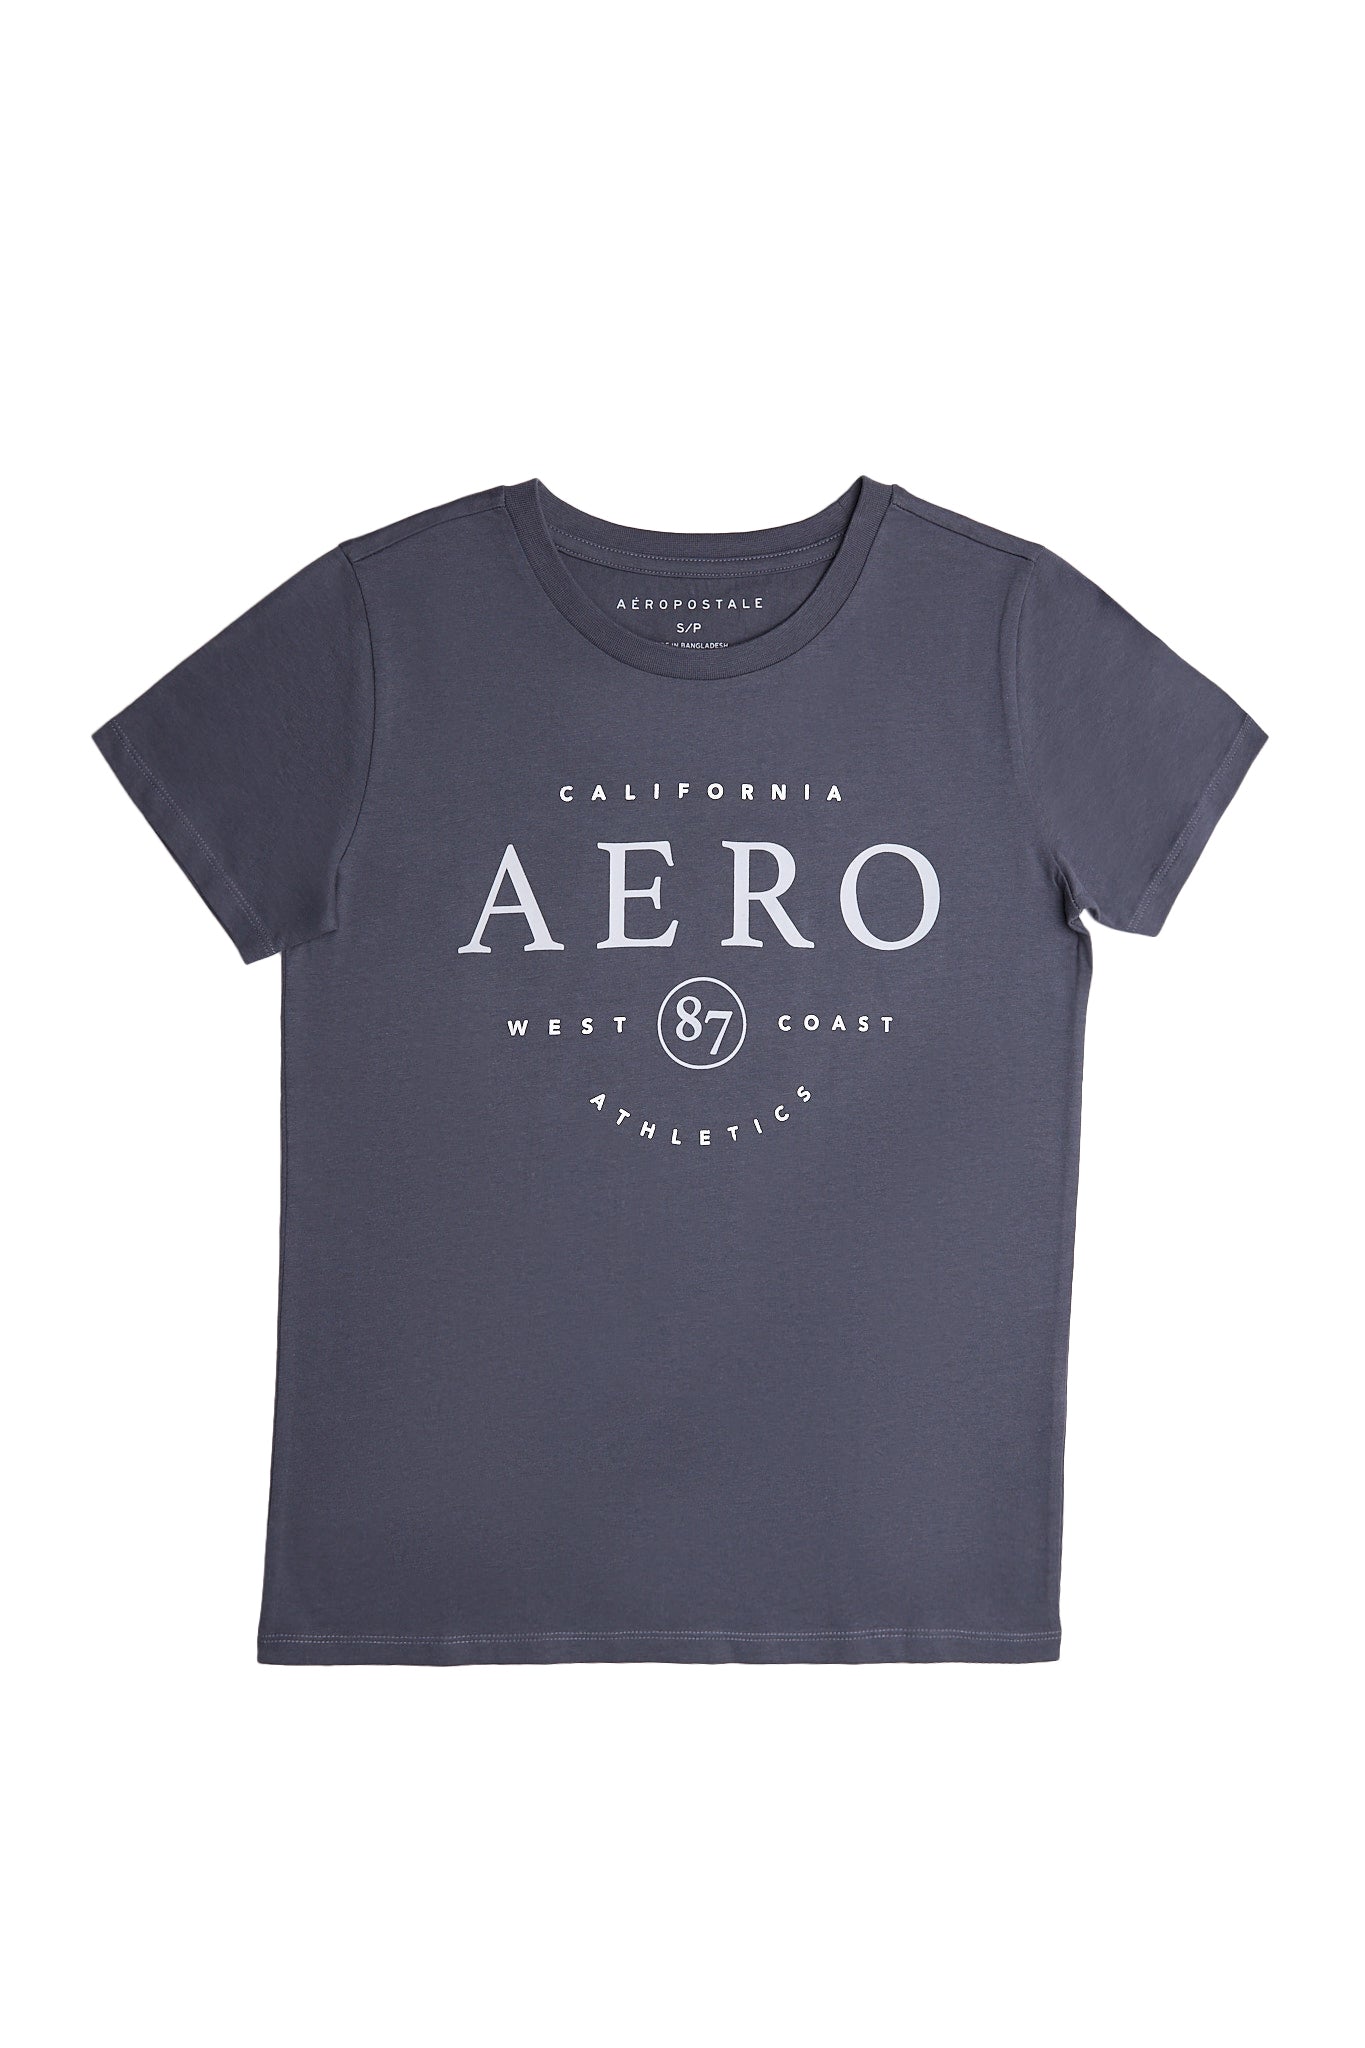 AERO 87 Graphic Classic Tee